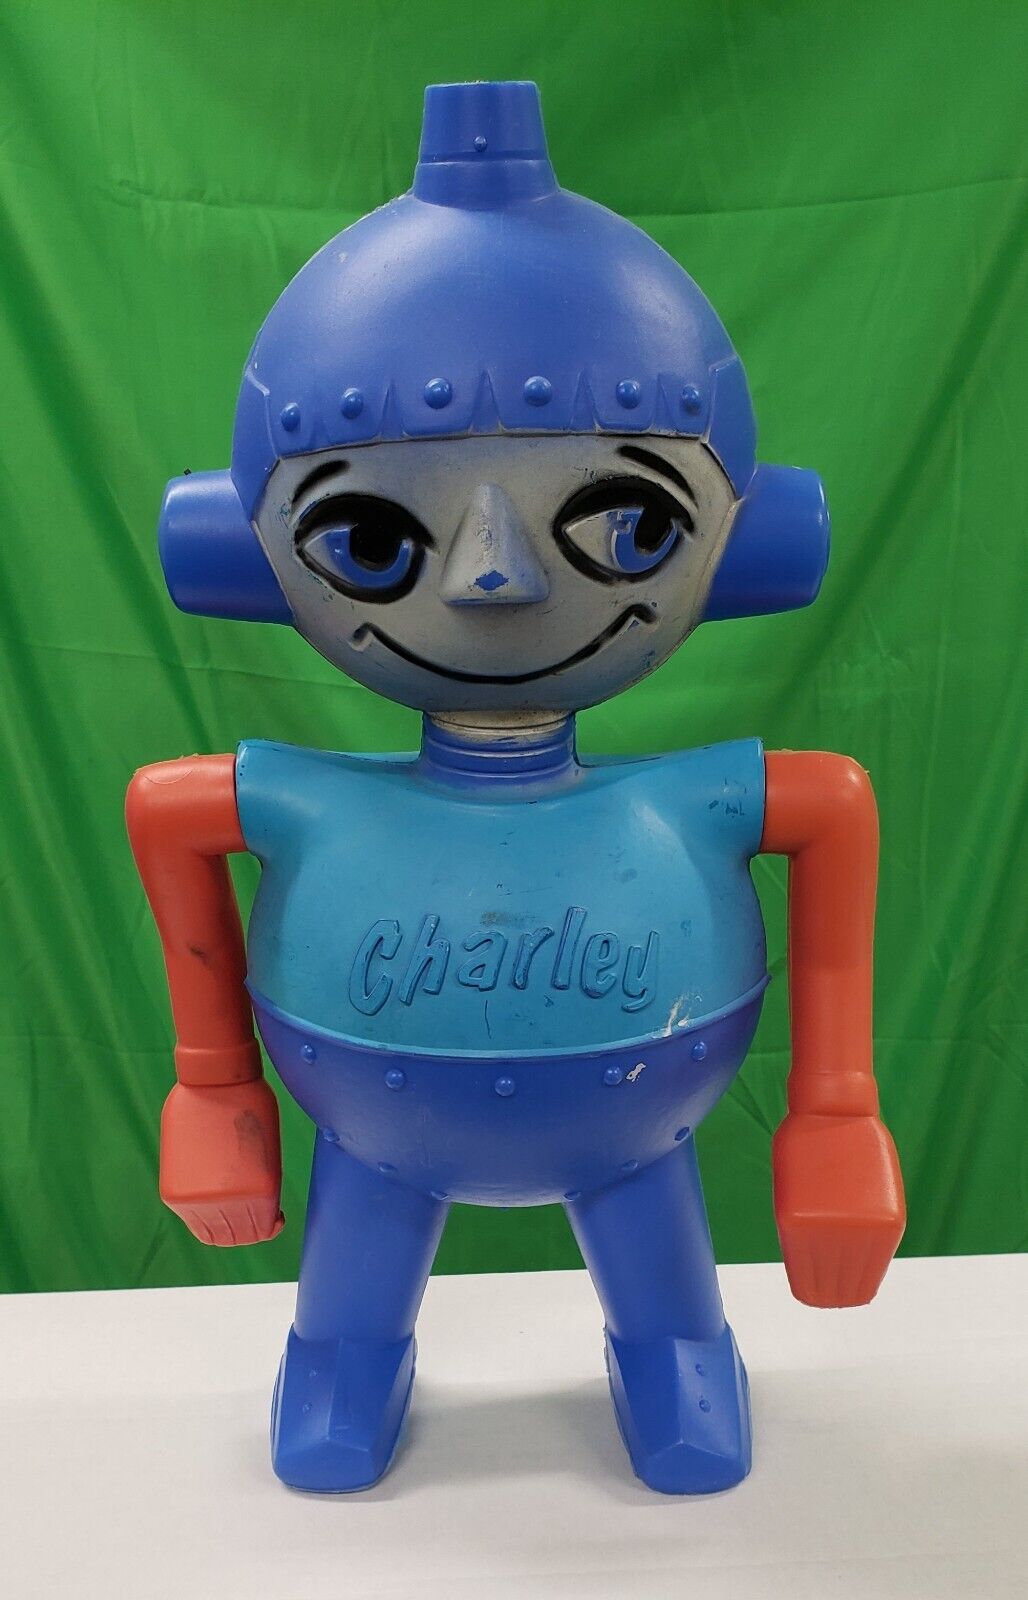 Vintage Charley \'N Me Robot Alien Figure by Topper 1967